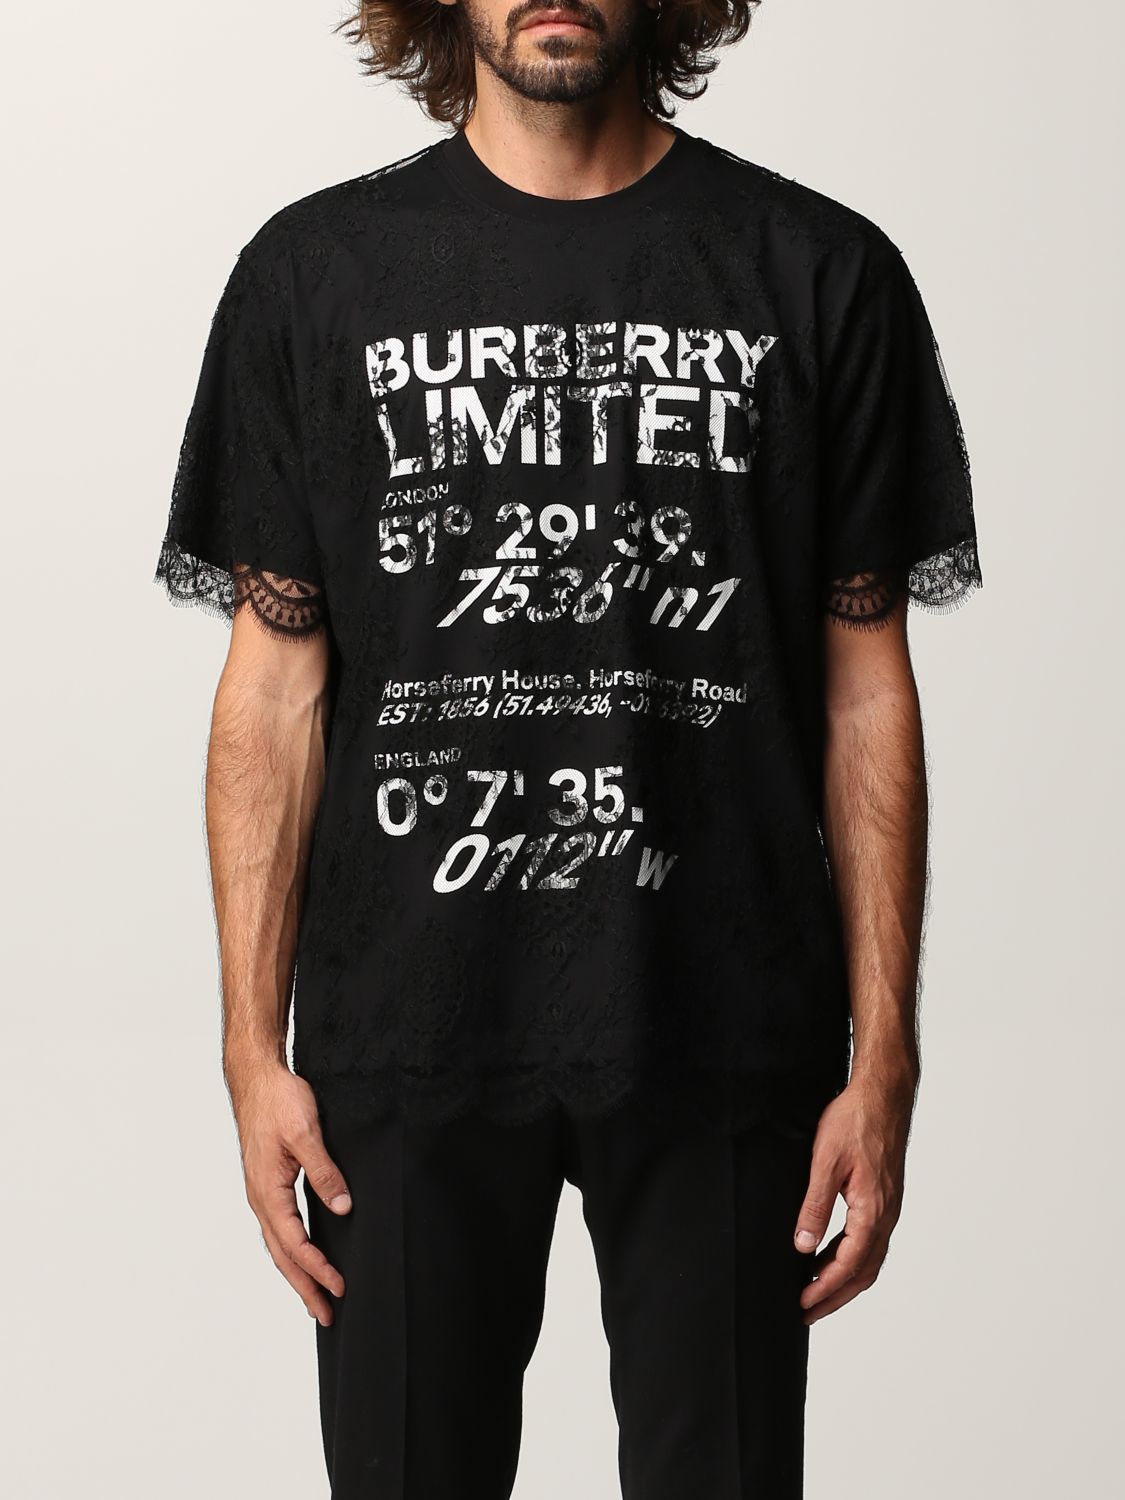 Ministry t Shirt Industrial Strength Tour 2020 T-Shirt Size M-2XL Men Black